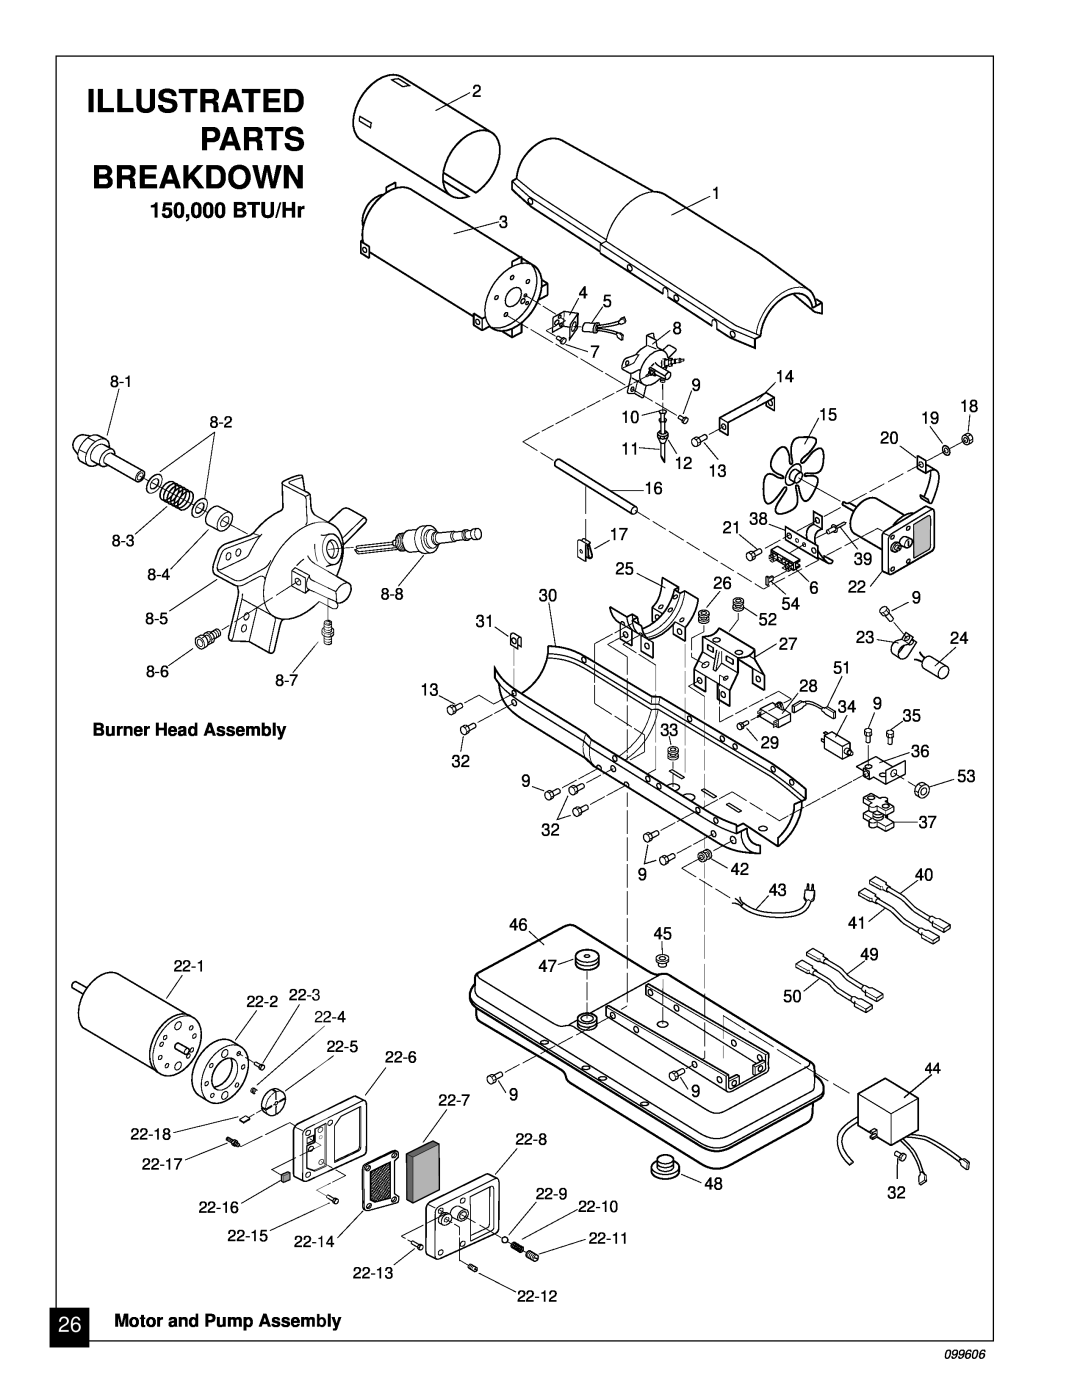 Desa 70, 90, 30 owner manual Illustrated, Parts, 150,000 BTU/Hr, Breakdown, Burner Head Assembly, 26Motor and Pump Assembly 